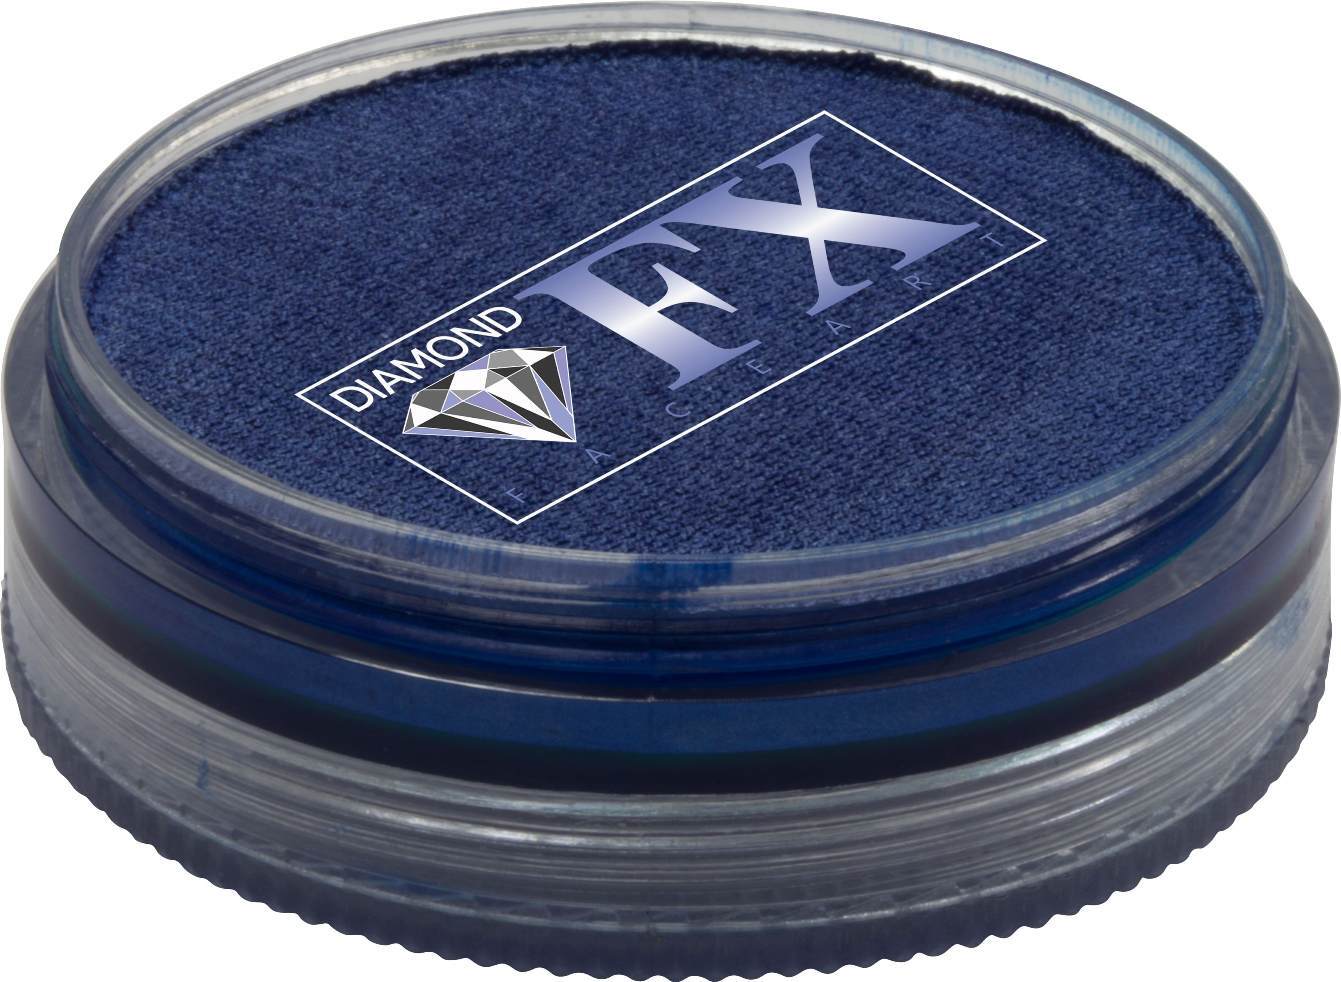 Diamond FX Blue Metallic 45g - Small Image